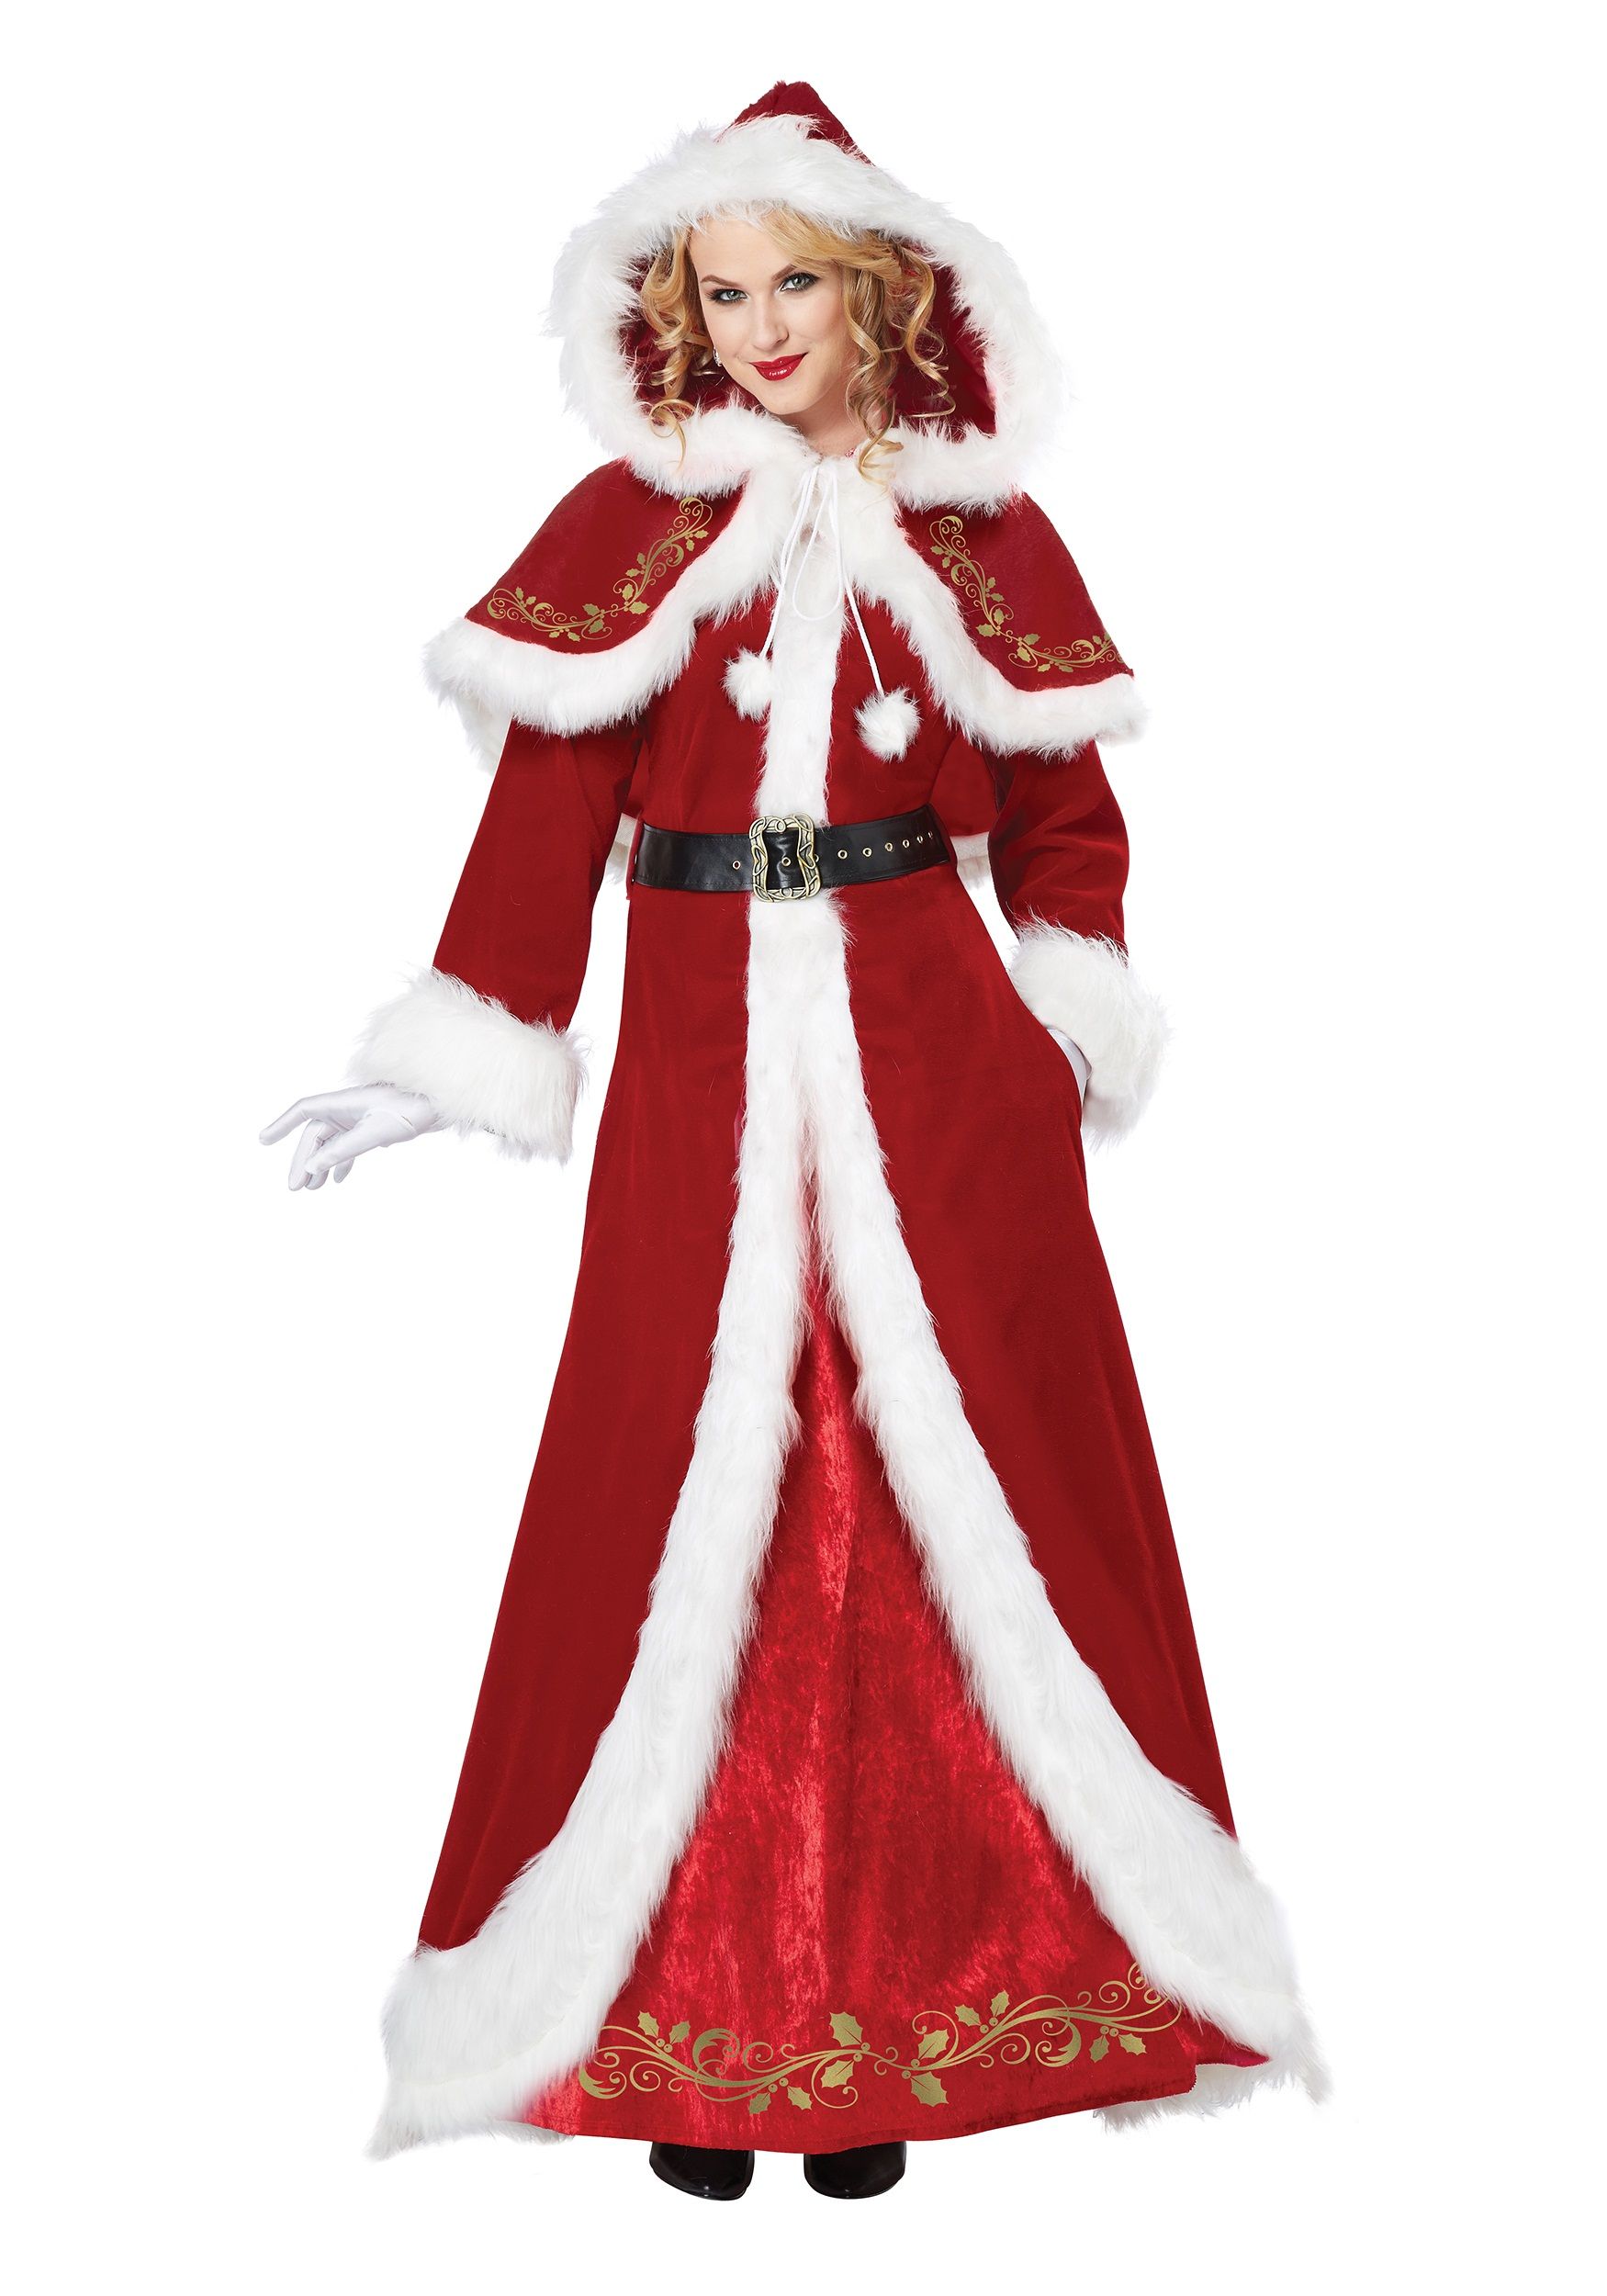 Have Fun With Mrs Santa Claus Costumes This Year | Costumes, Santa ...